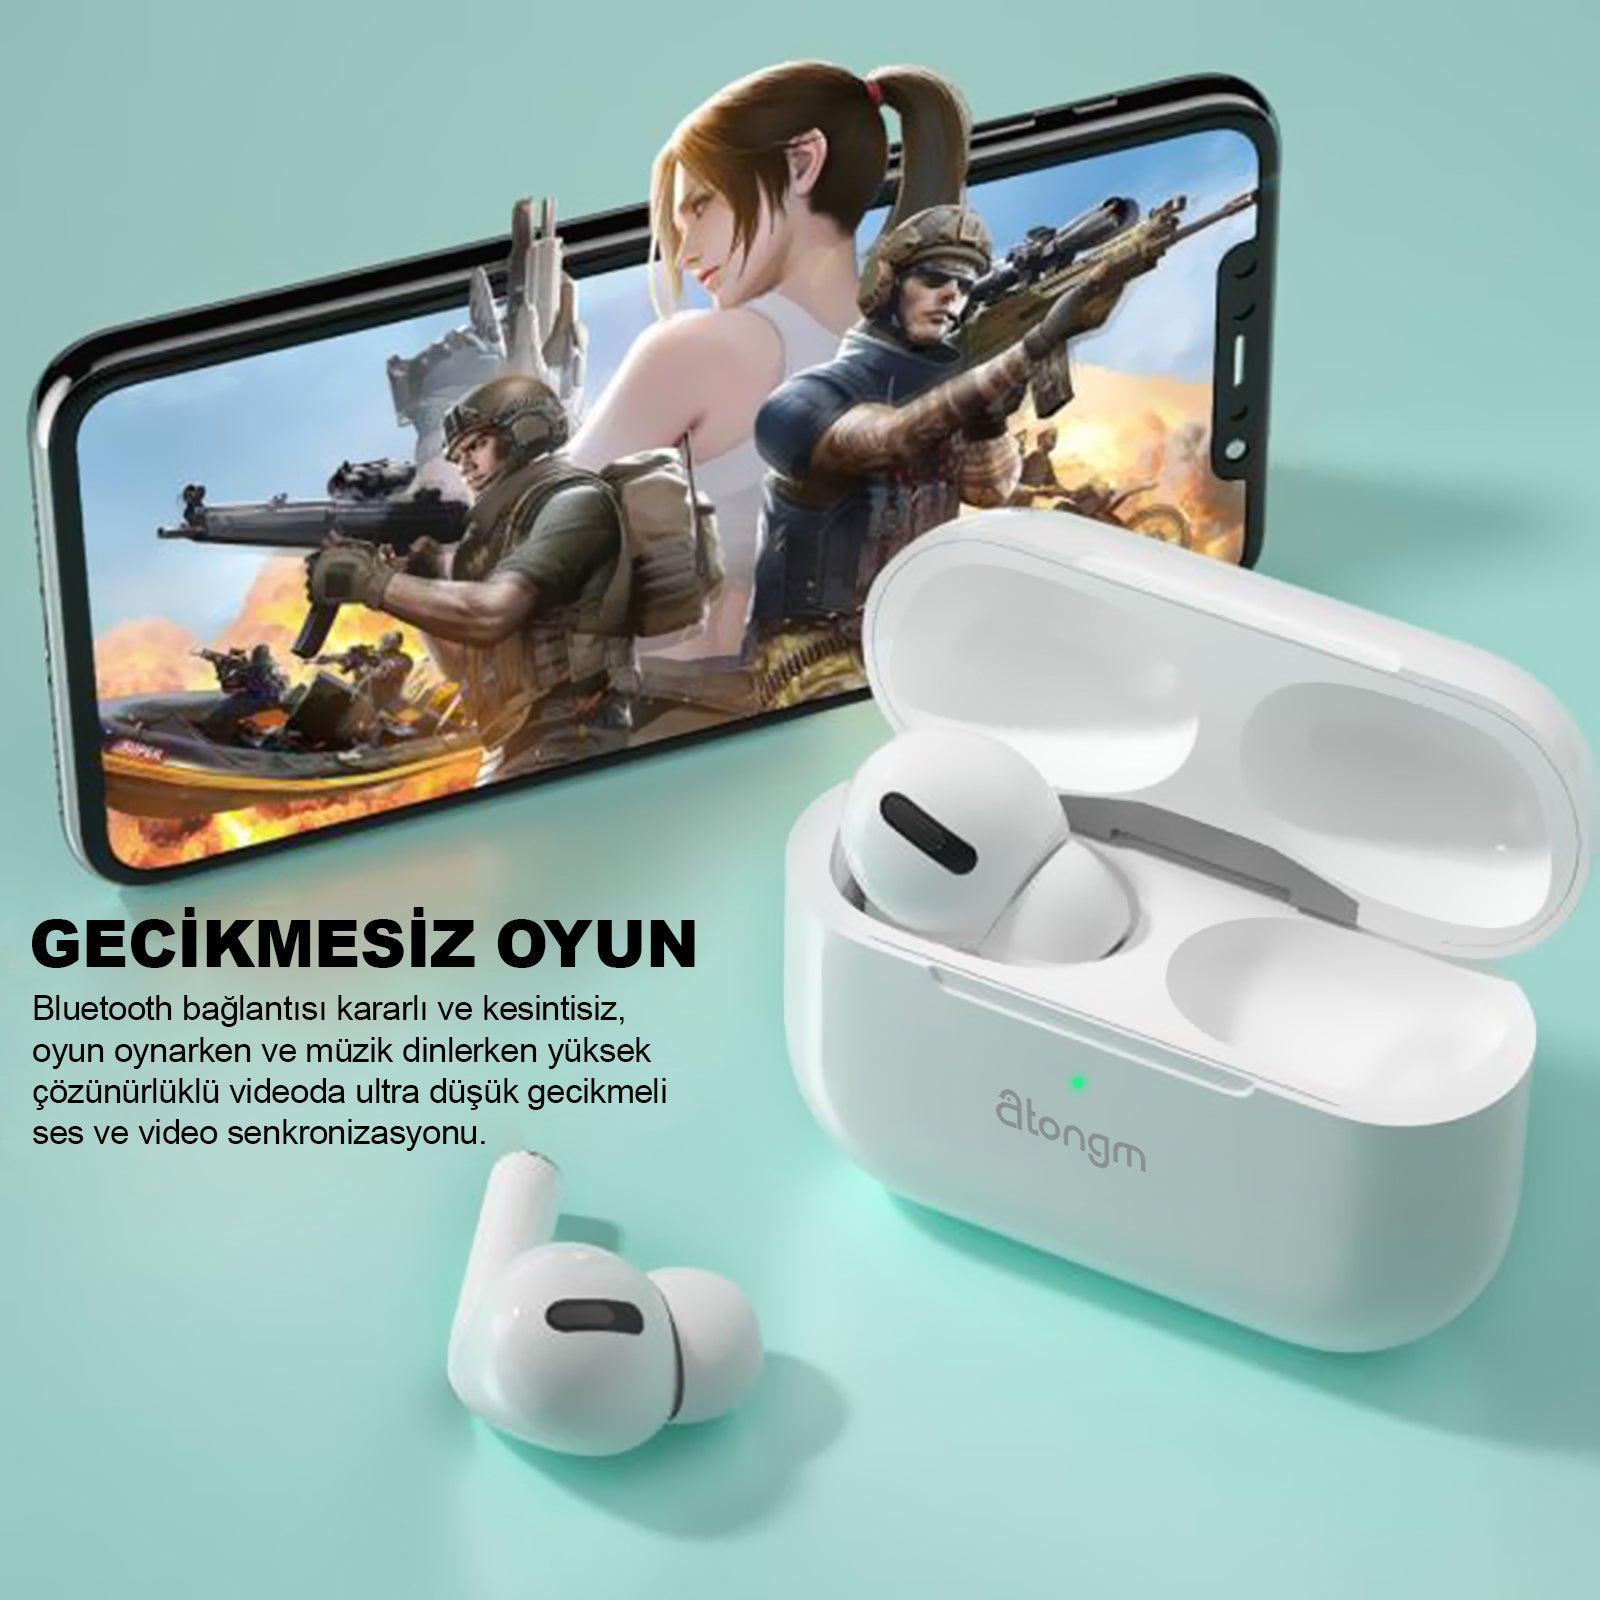 atongm Air 9 Pro ANC Aktif Gürültü Azaltma Kablosuz Bluetooth Kulaklık, Kablosuz Şarj ile Uyumlu IOS/Android